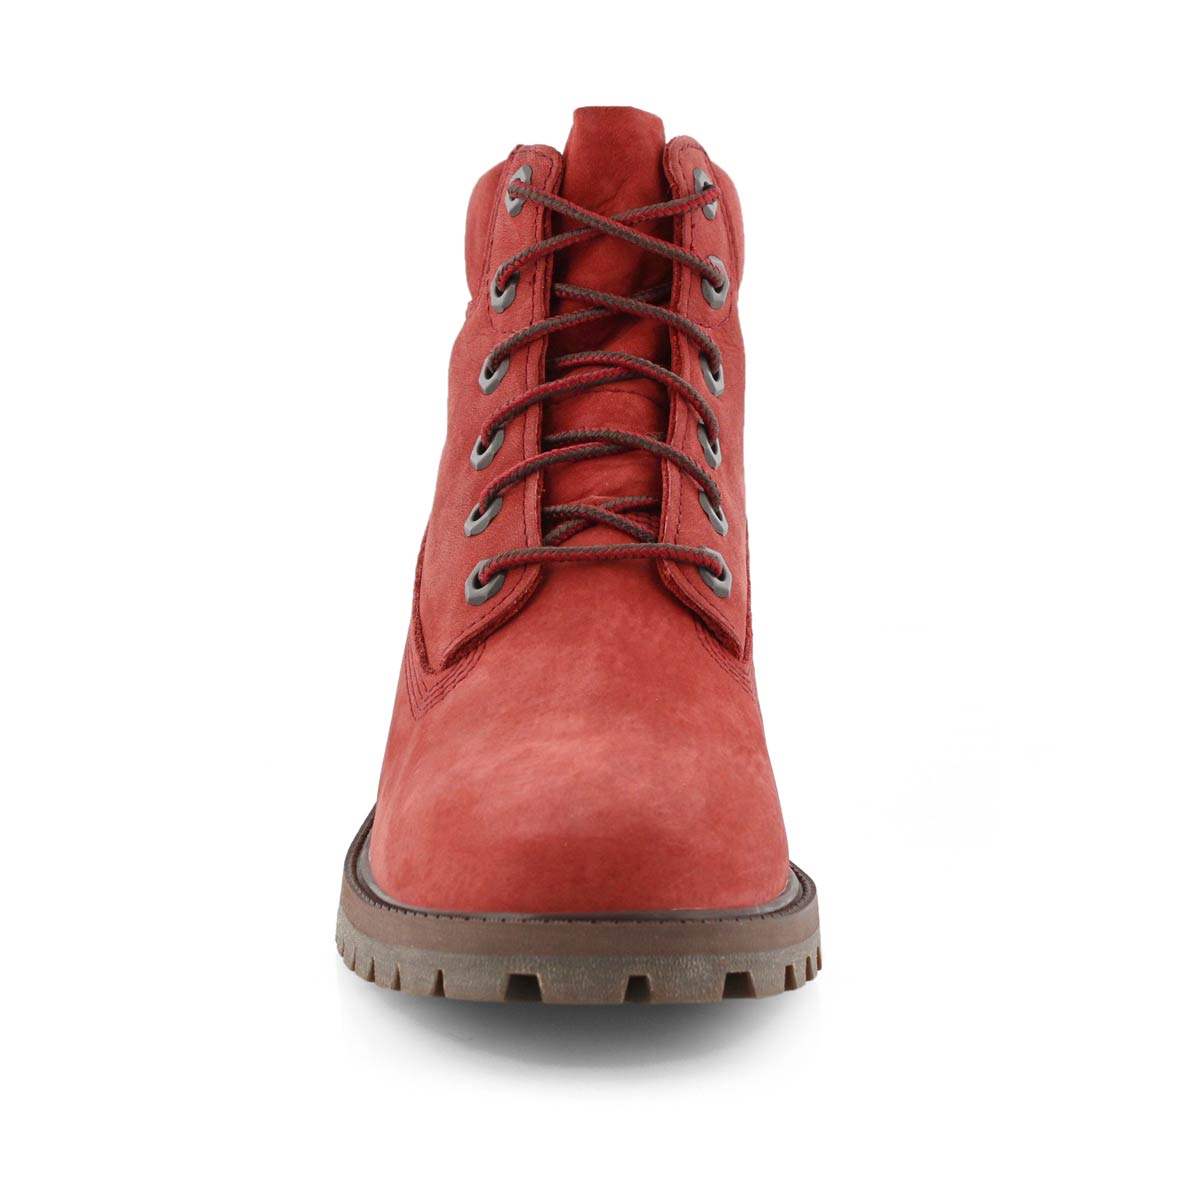 Kids' PREMIUM 6 waterproof dark red boots